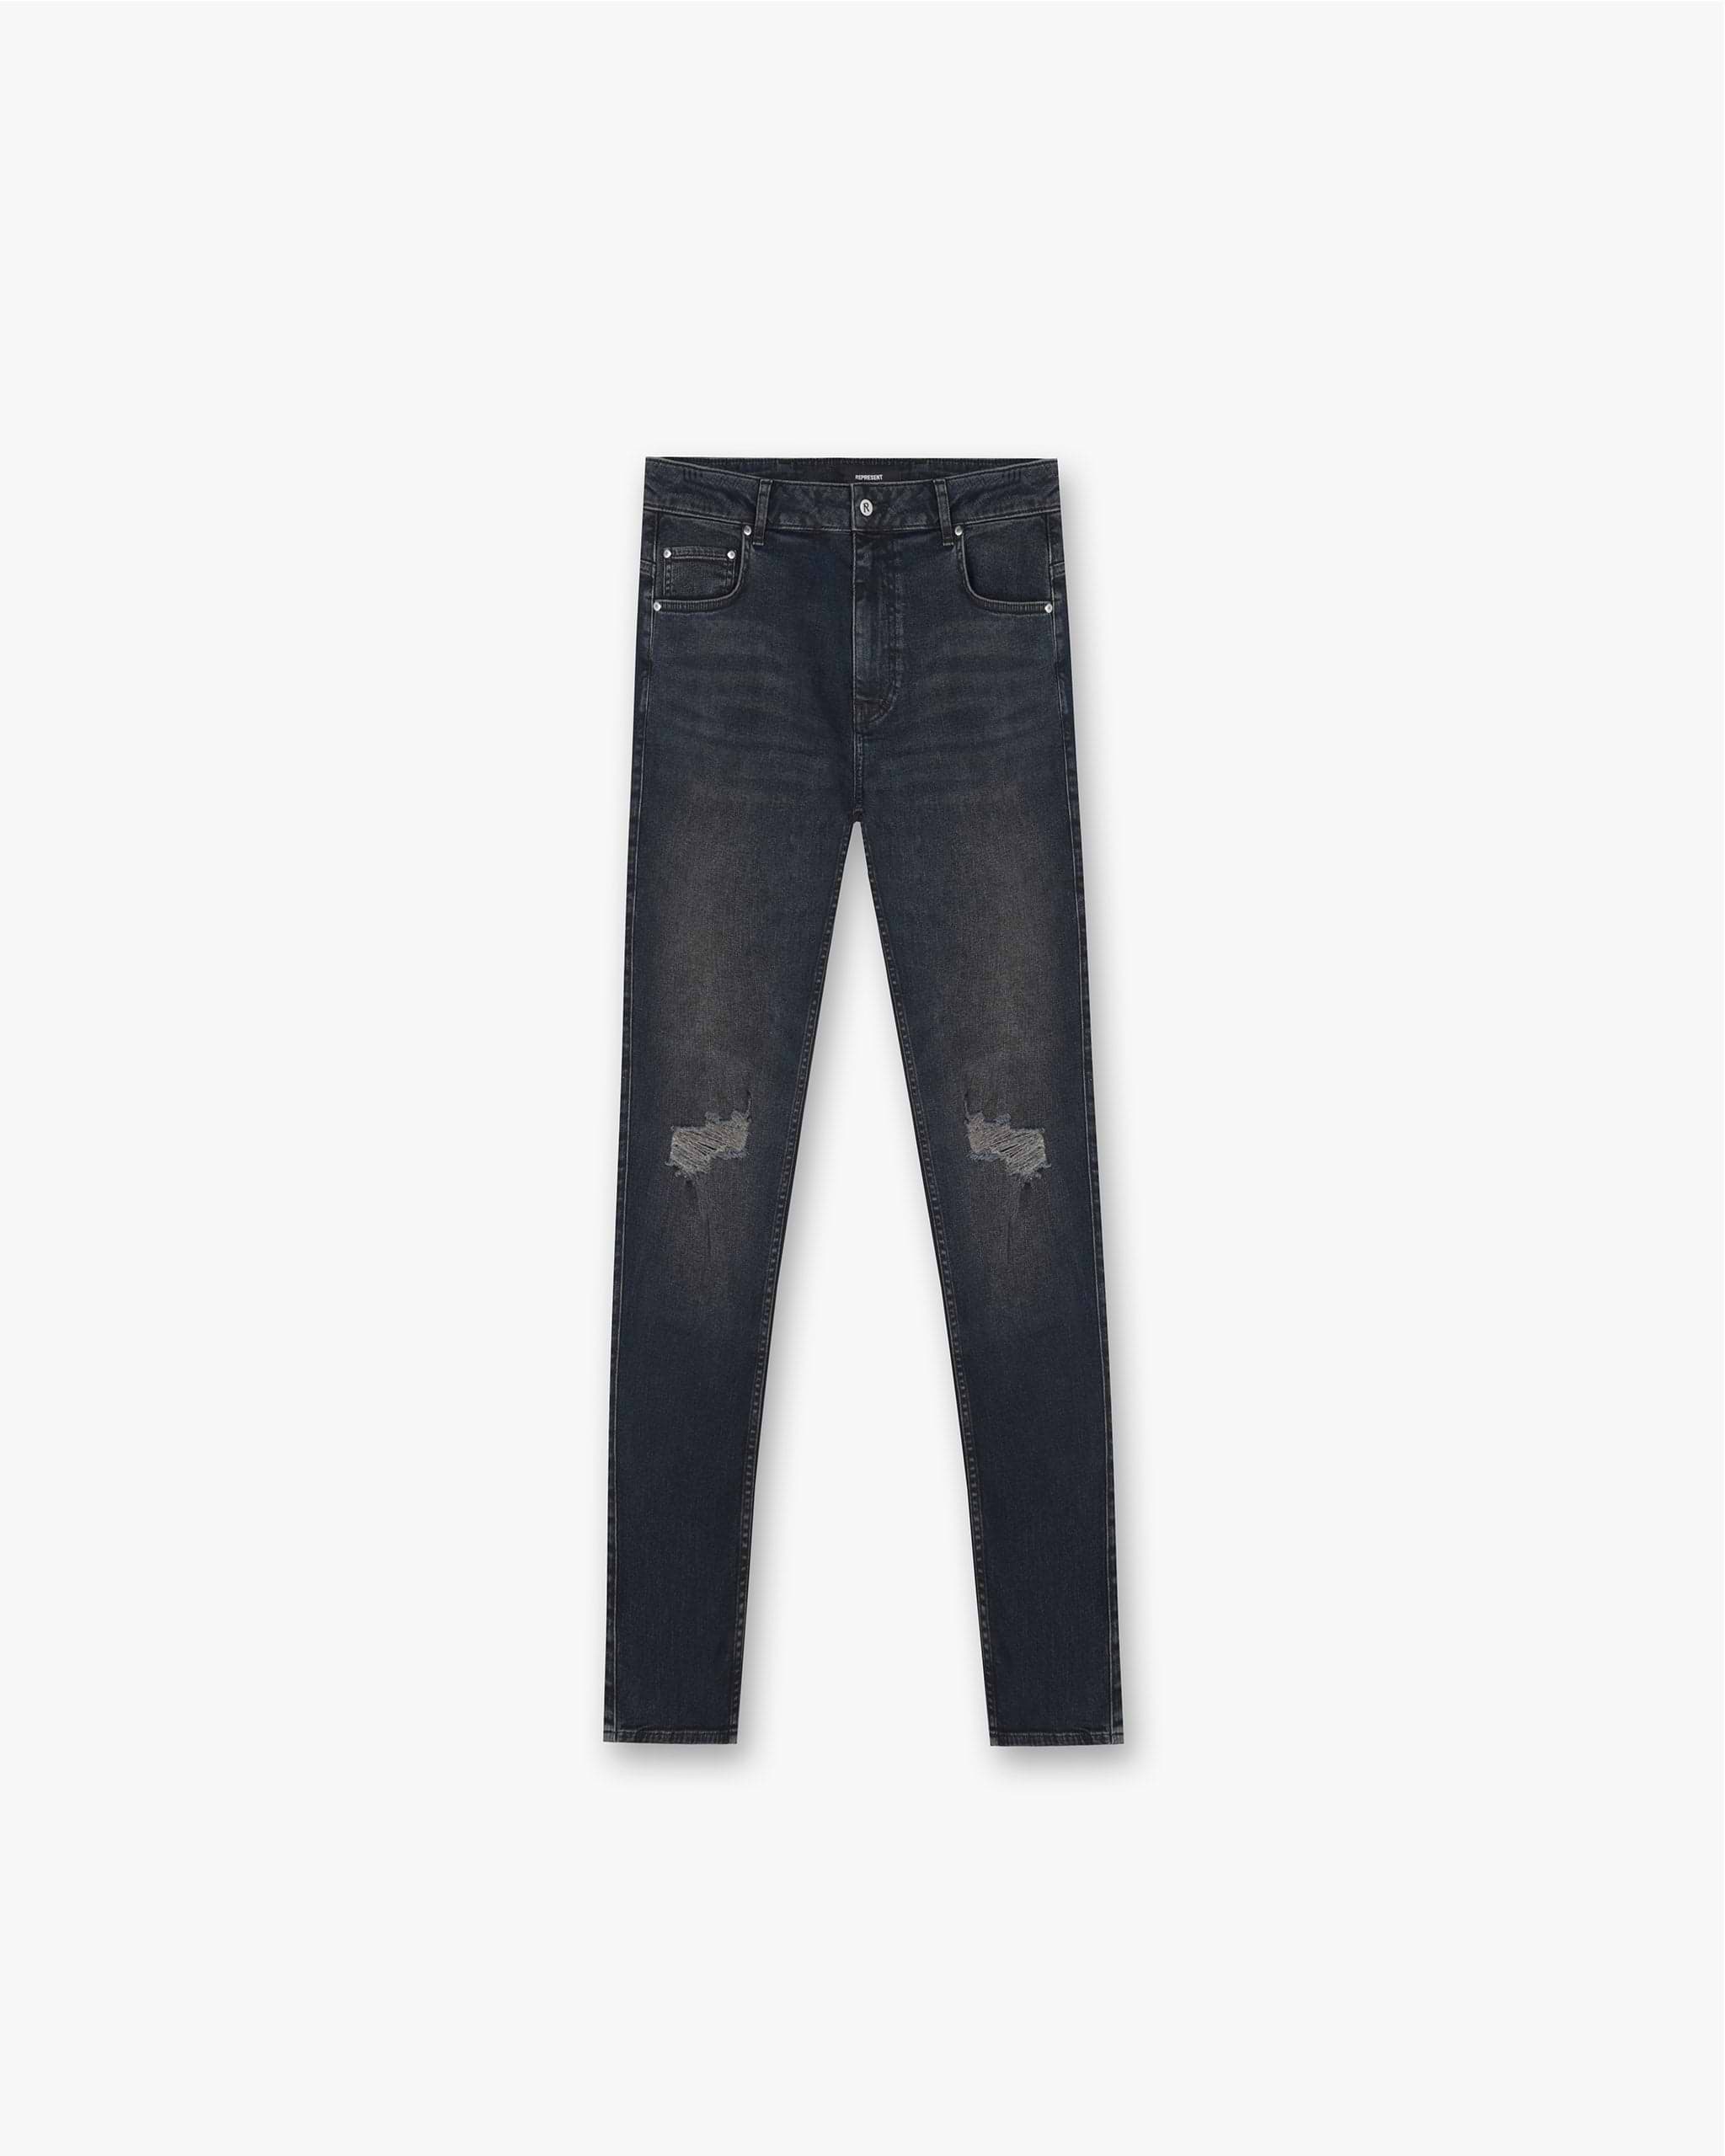 Zara ripped jeans | Ripped jeans, Zara, Jeans shop